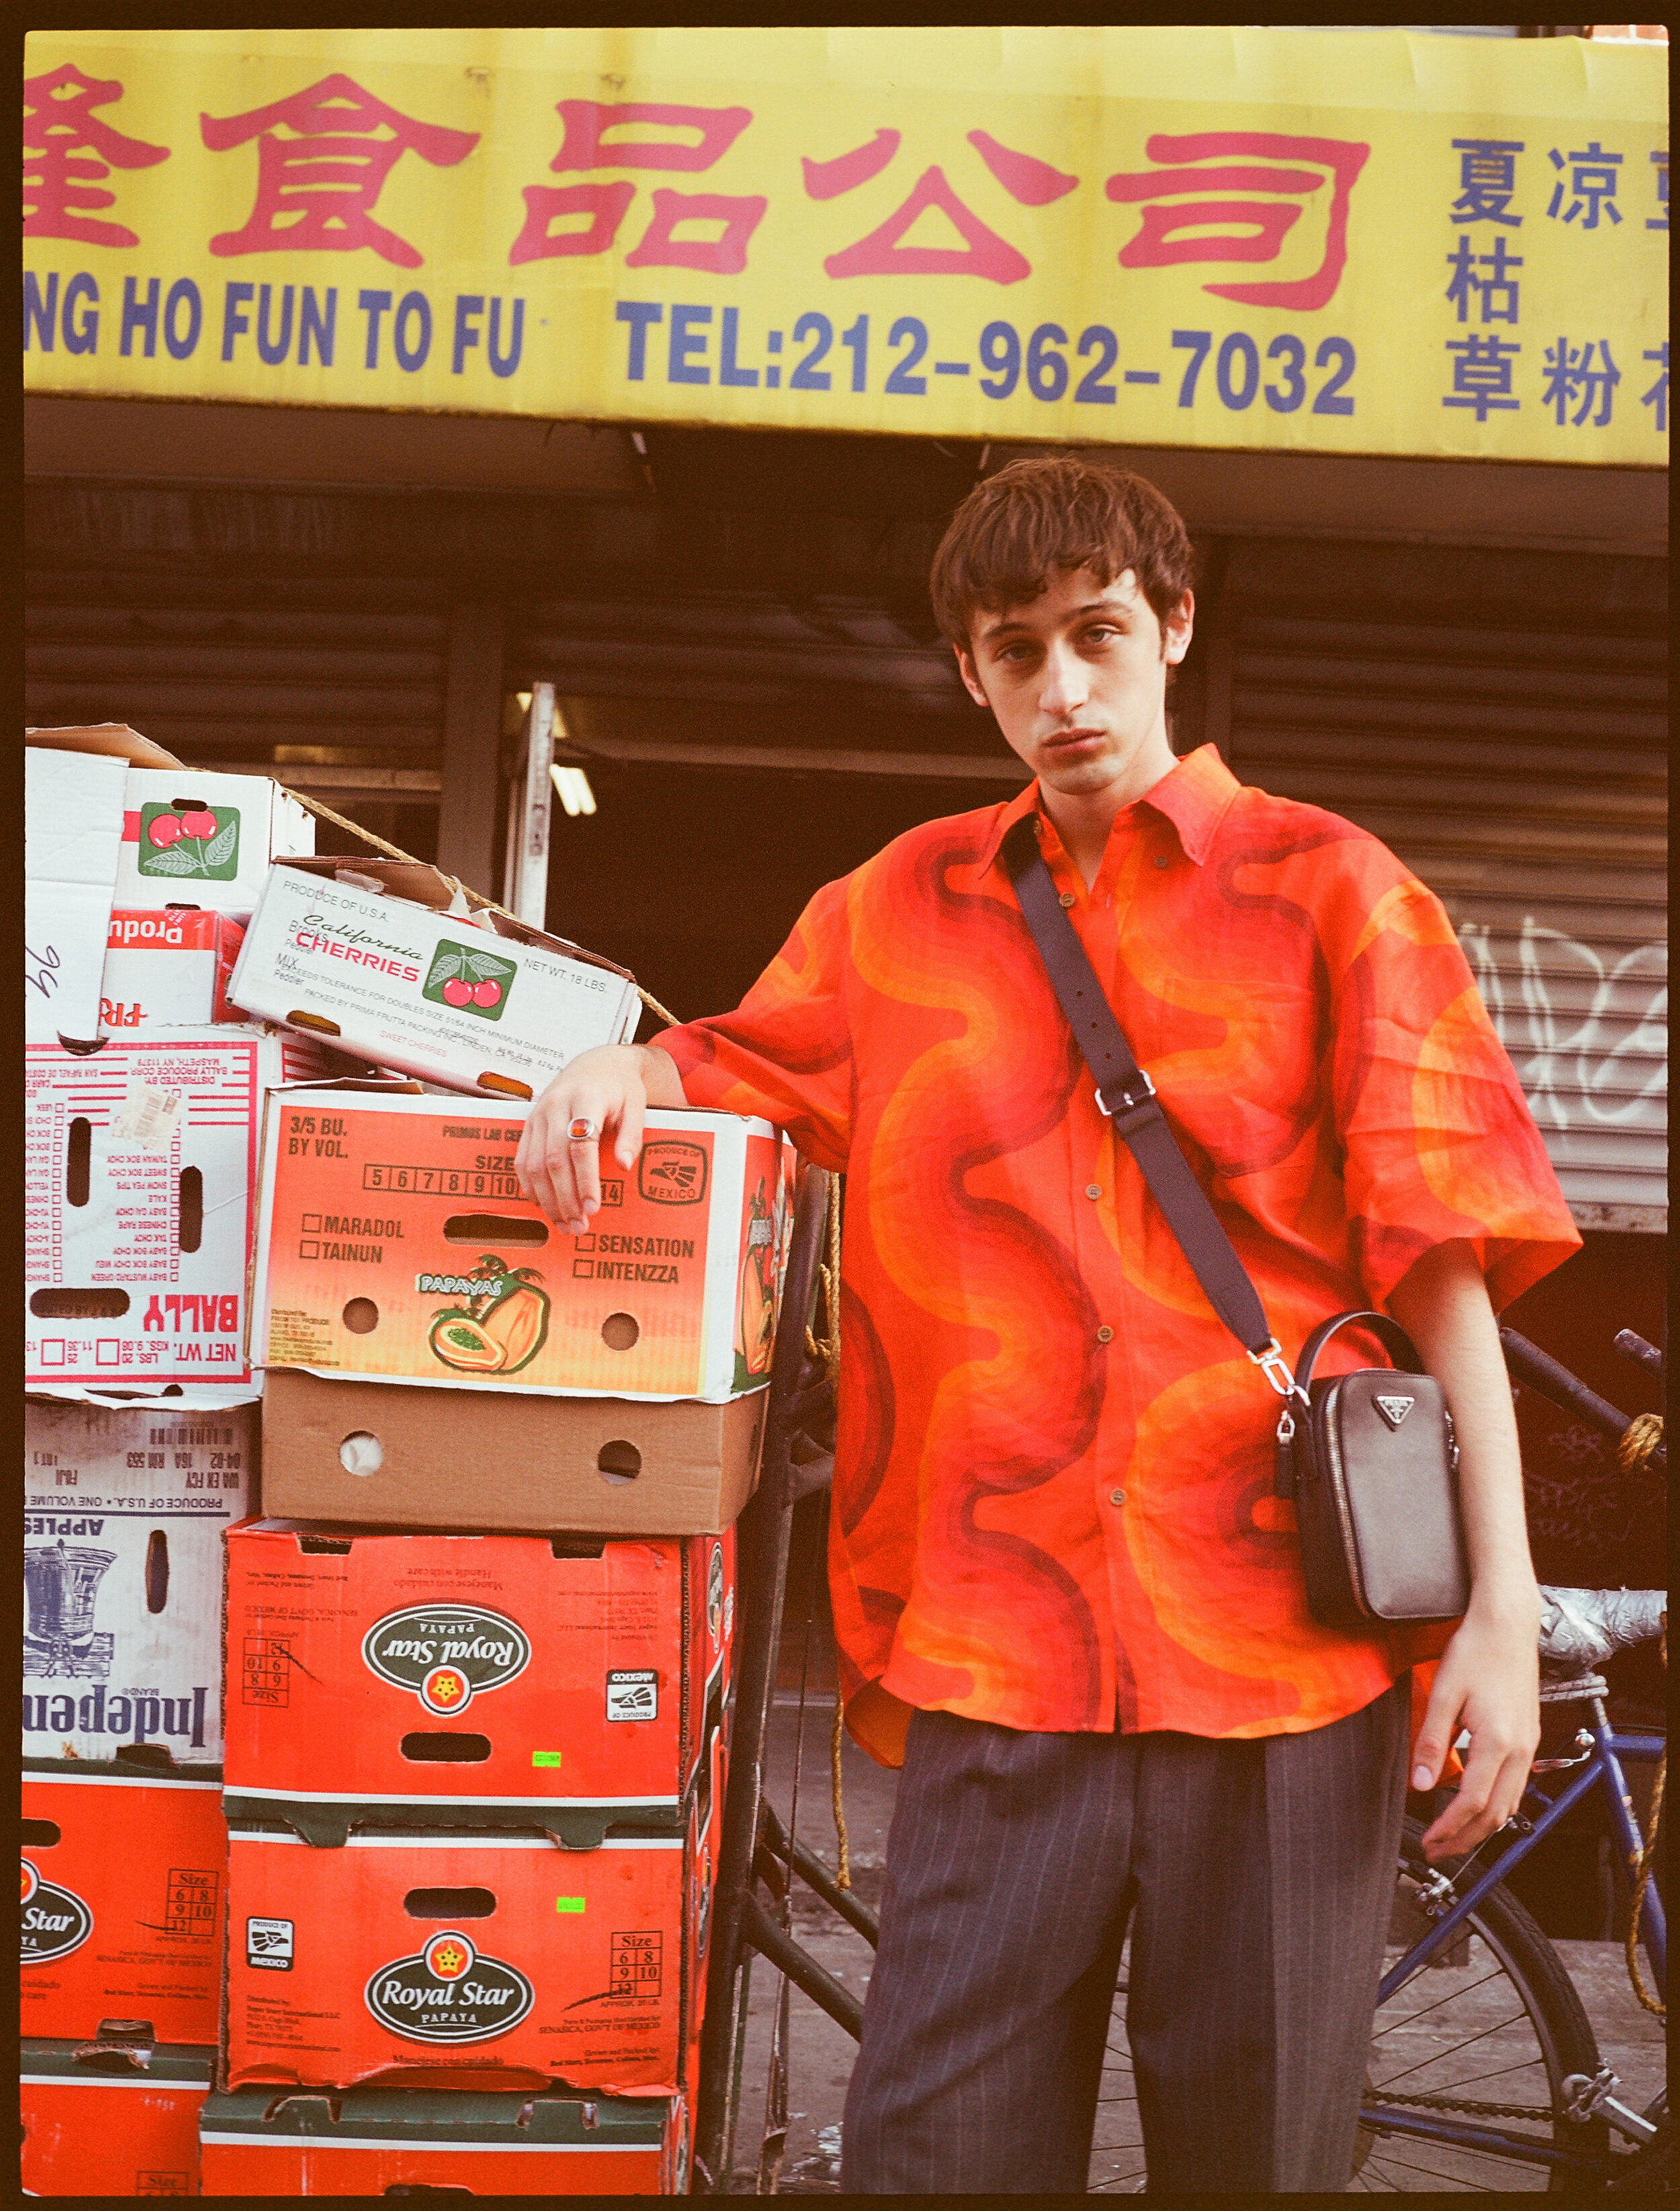 Fashion influencer Eric Jess wears a bright orange shirt next to some orange Papaya boxes in Chinatown, NYC